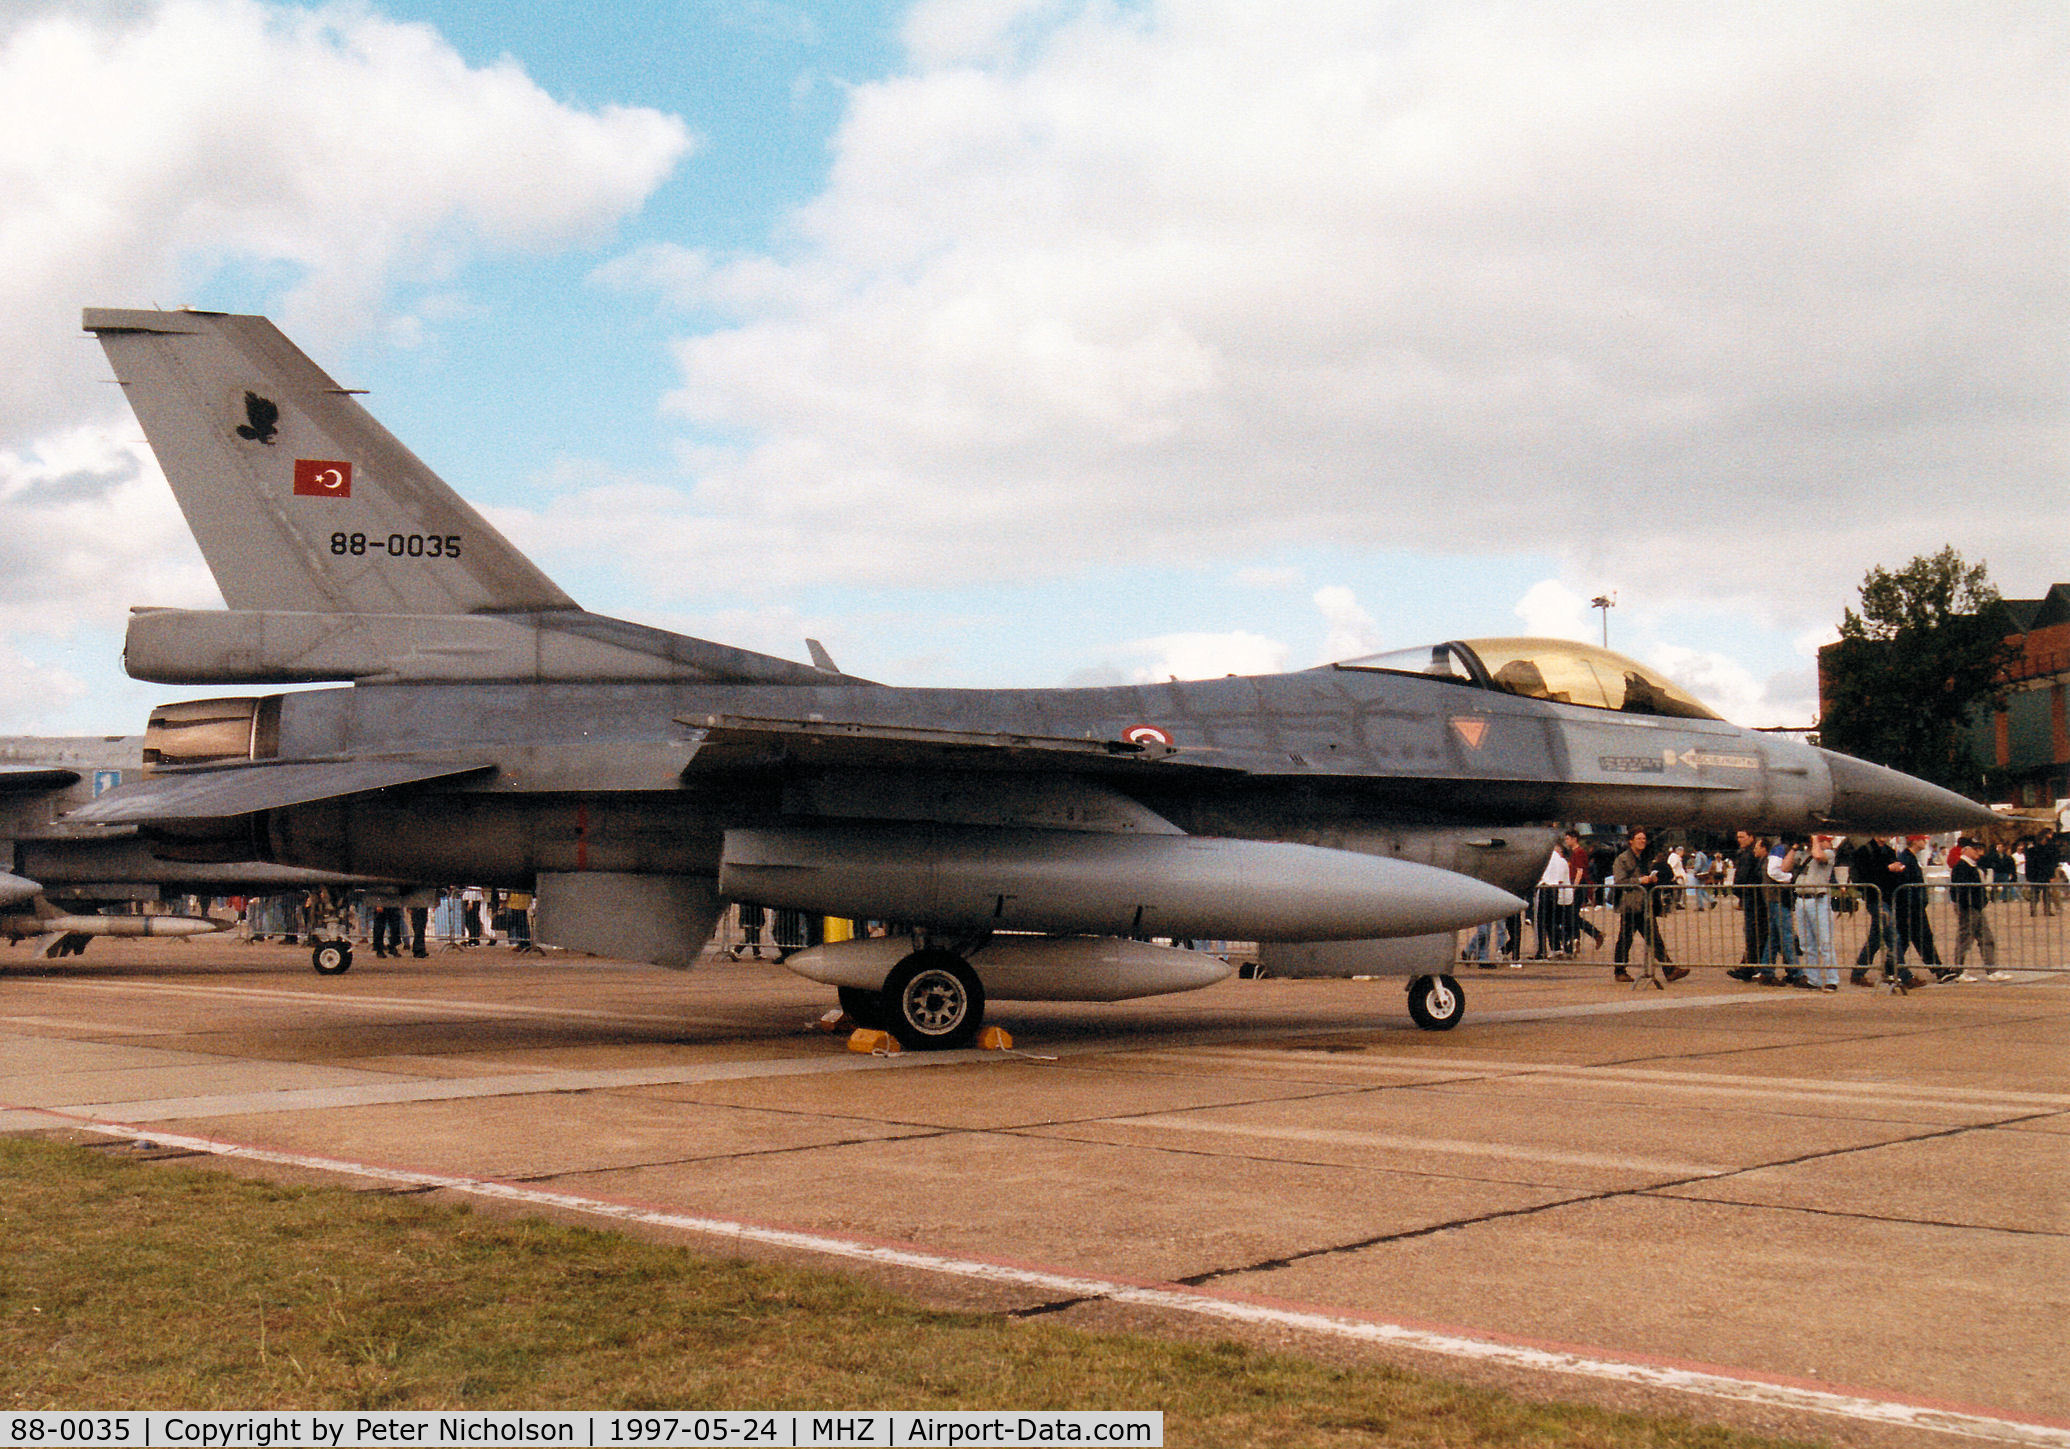 88-0035, 1988 TAI (Turkish Aerospace Industries) F-16C Fighting Falcon C/N 4R-37, F-16C Fighting Falcon, callsign Kurt 21, of Turkish Air Force's 141 Filo on display at the 1997 RAF Mildenhall Air Fete.